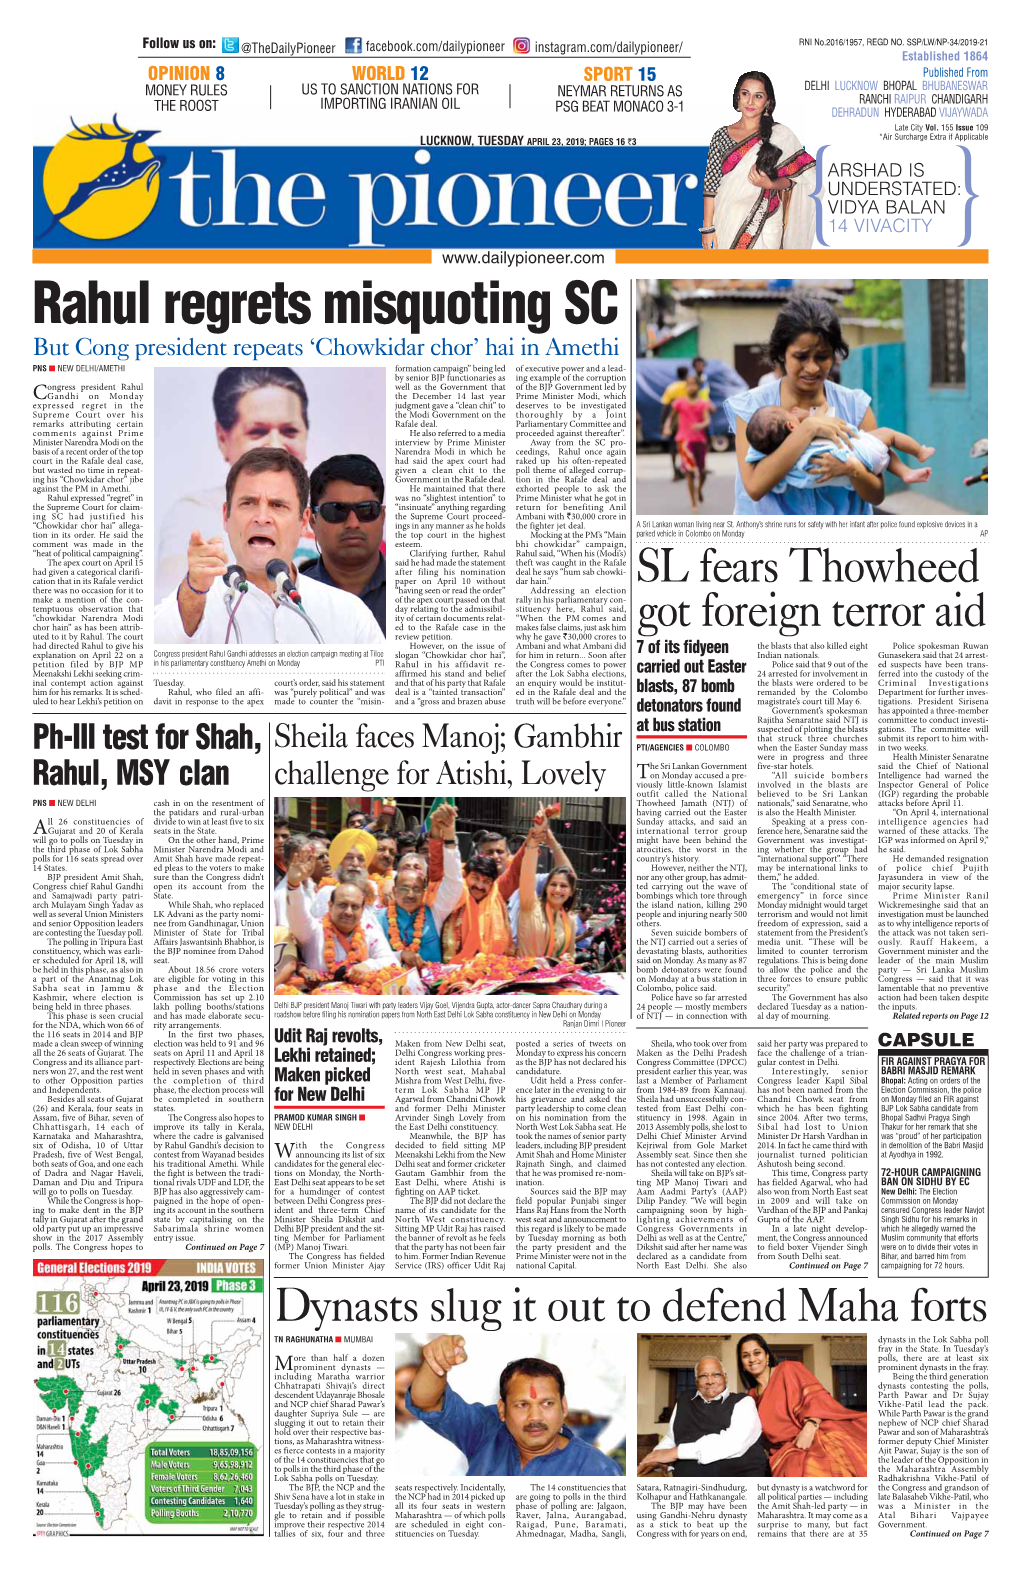 Rahul Regrets Misquoting SC